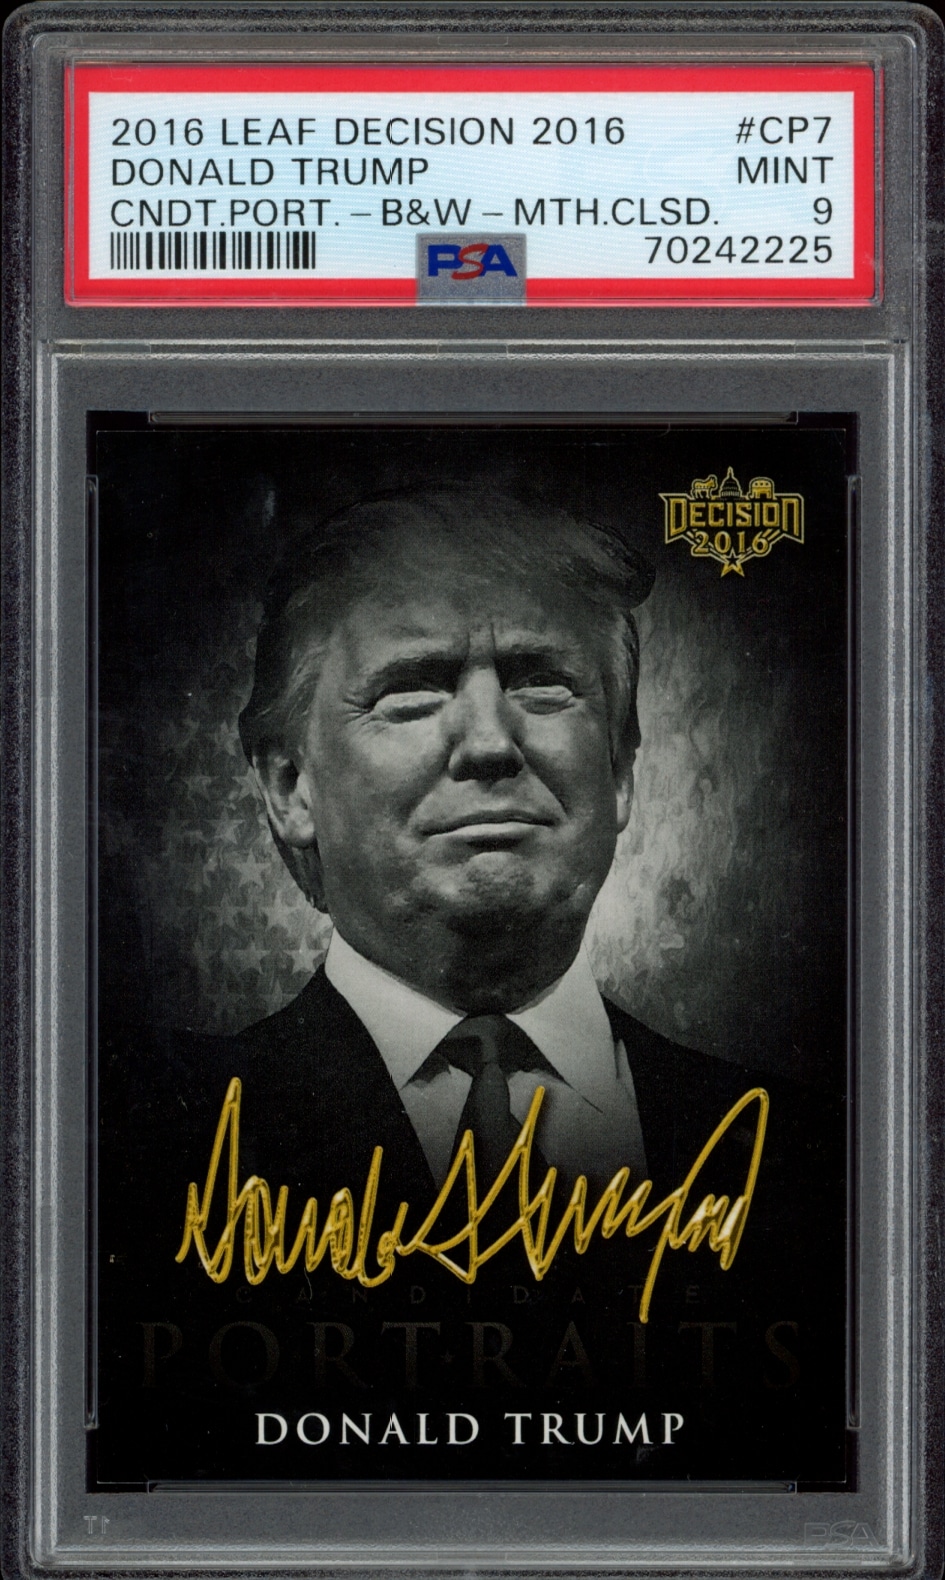 Donald Trump 2016 Leaf Decision Candidate Portrait trading card, black & white, PSA 9 certified.